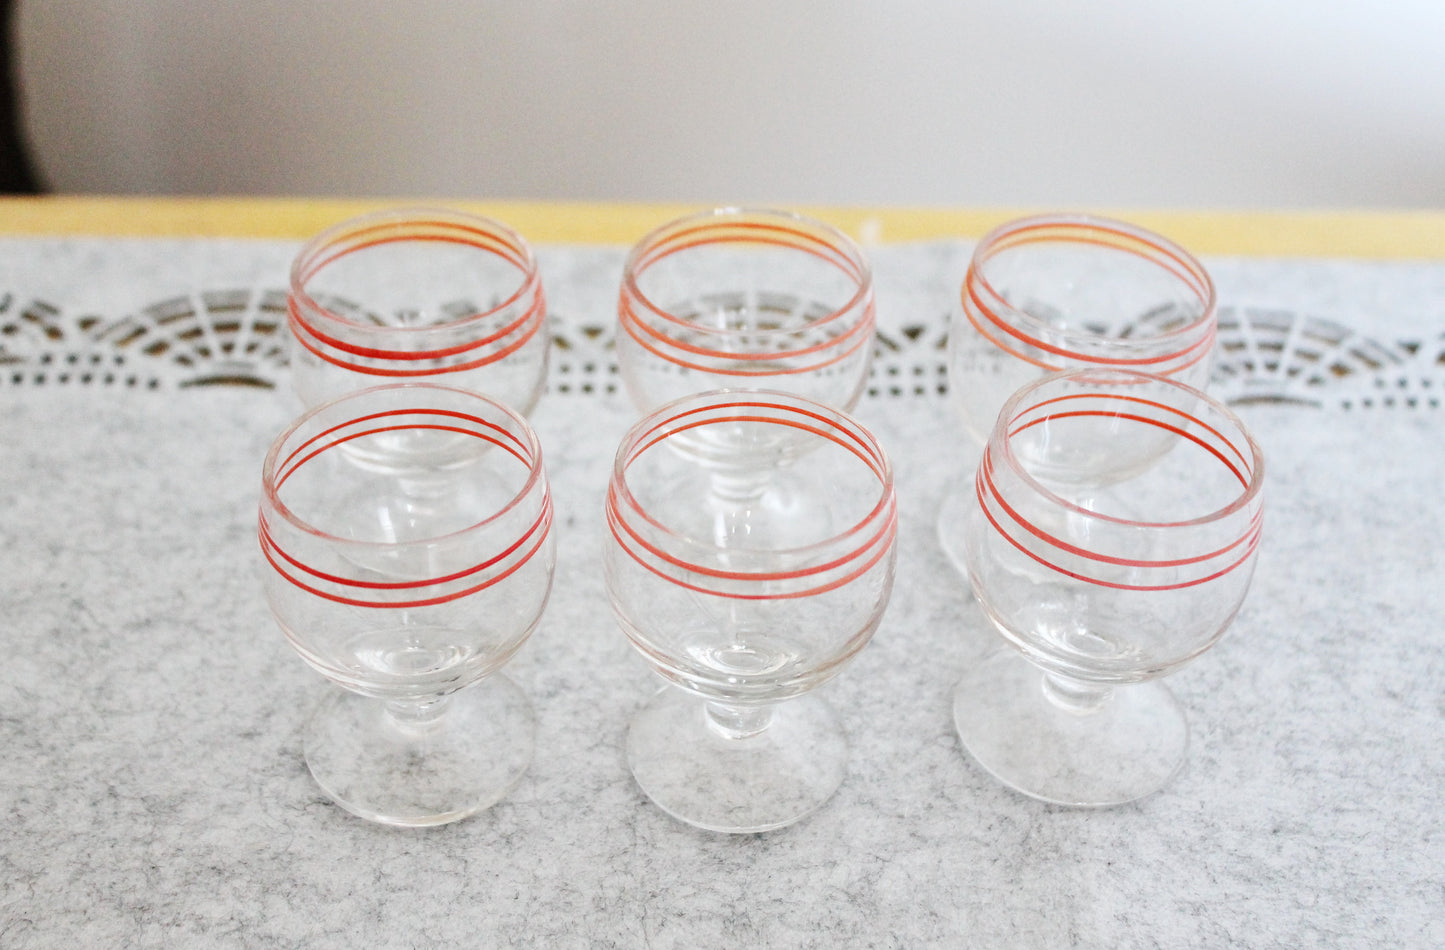 Set of 6 Vintage USSR small Glasses on a leg in original box - glasswares, housewares, antique, 1960s. Soviet Union. Holiday decor